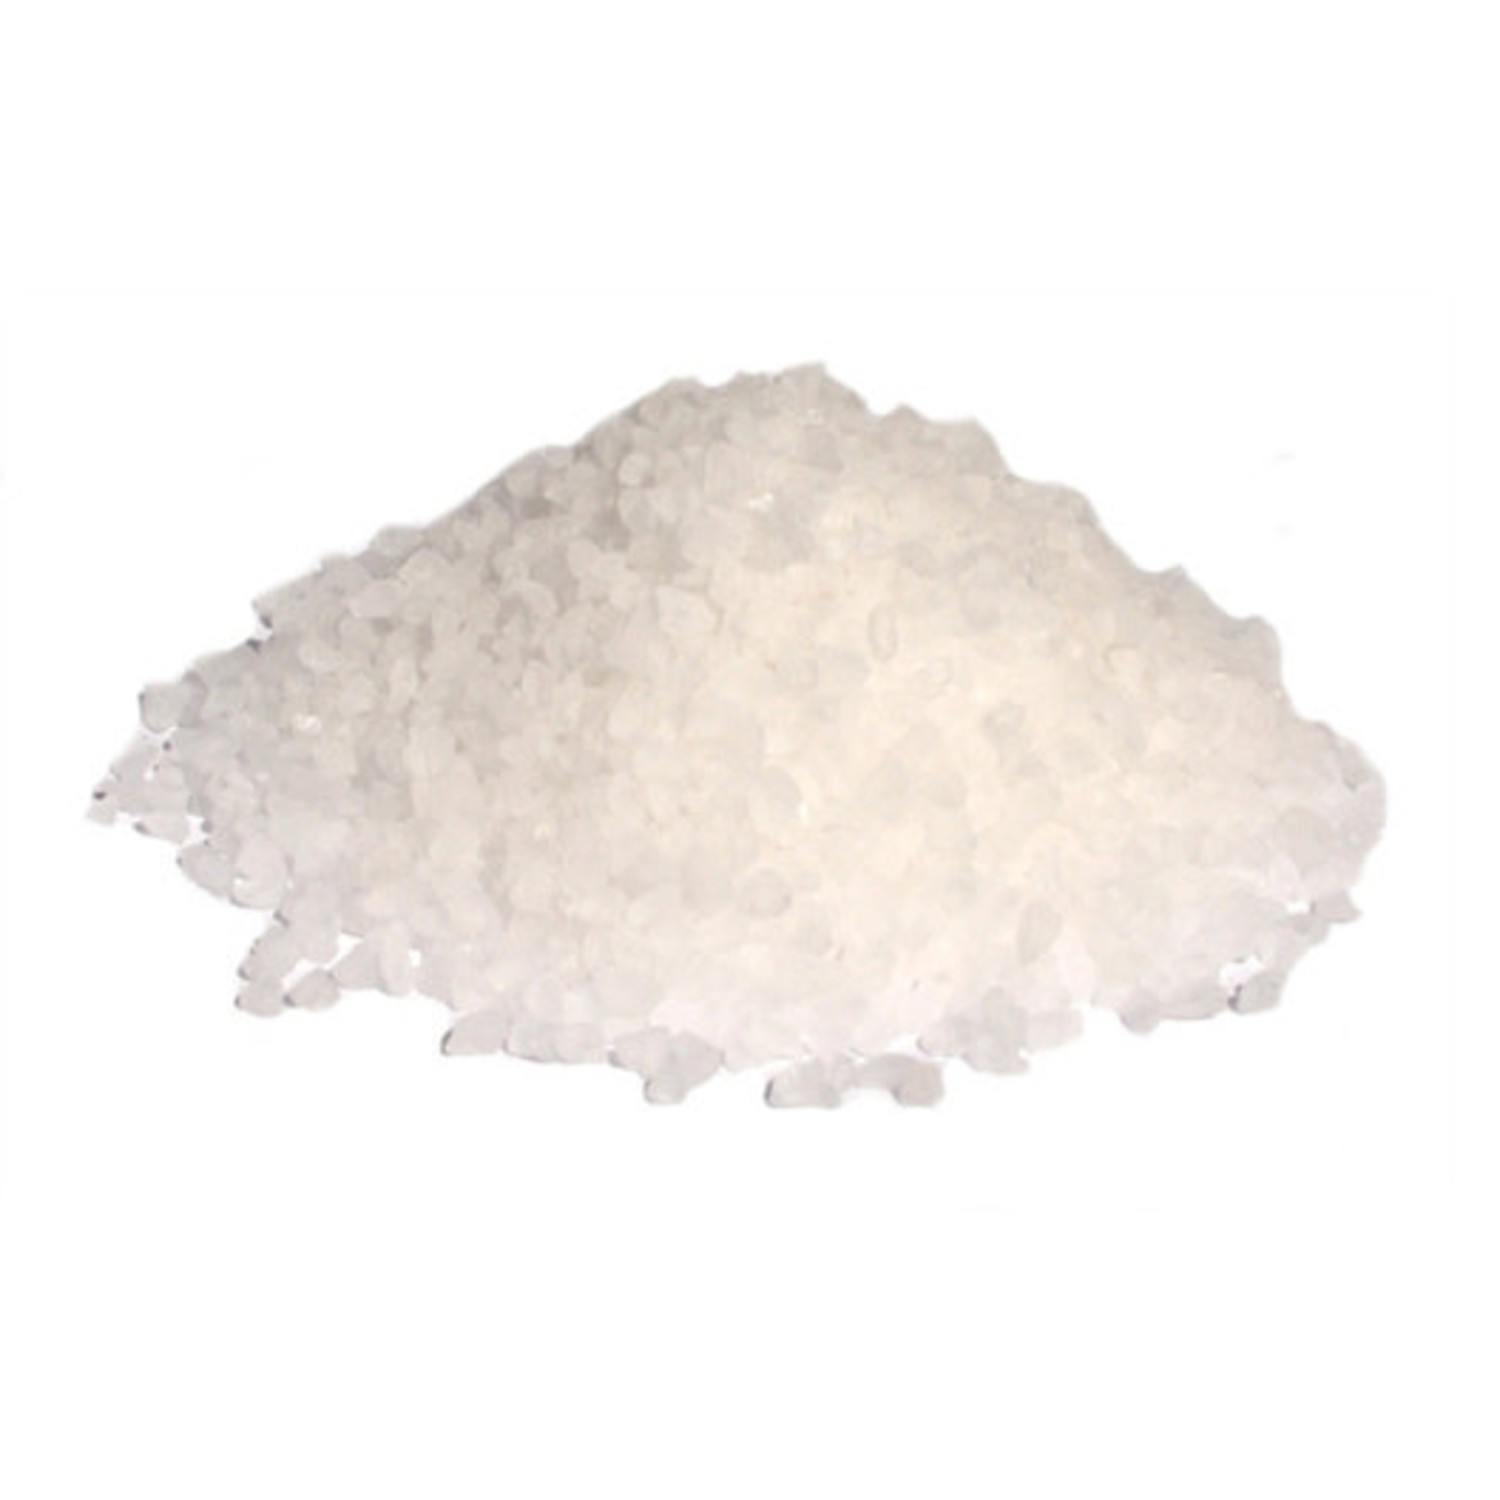 https://cdn.shoplightspeed.com/shops/633447/files/44238864/1500x4000x3/1lb-coarse-sea-salt-for-salt-mills.jpg